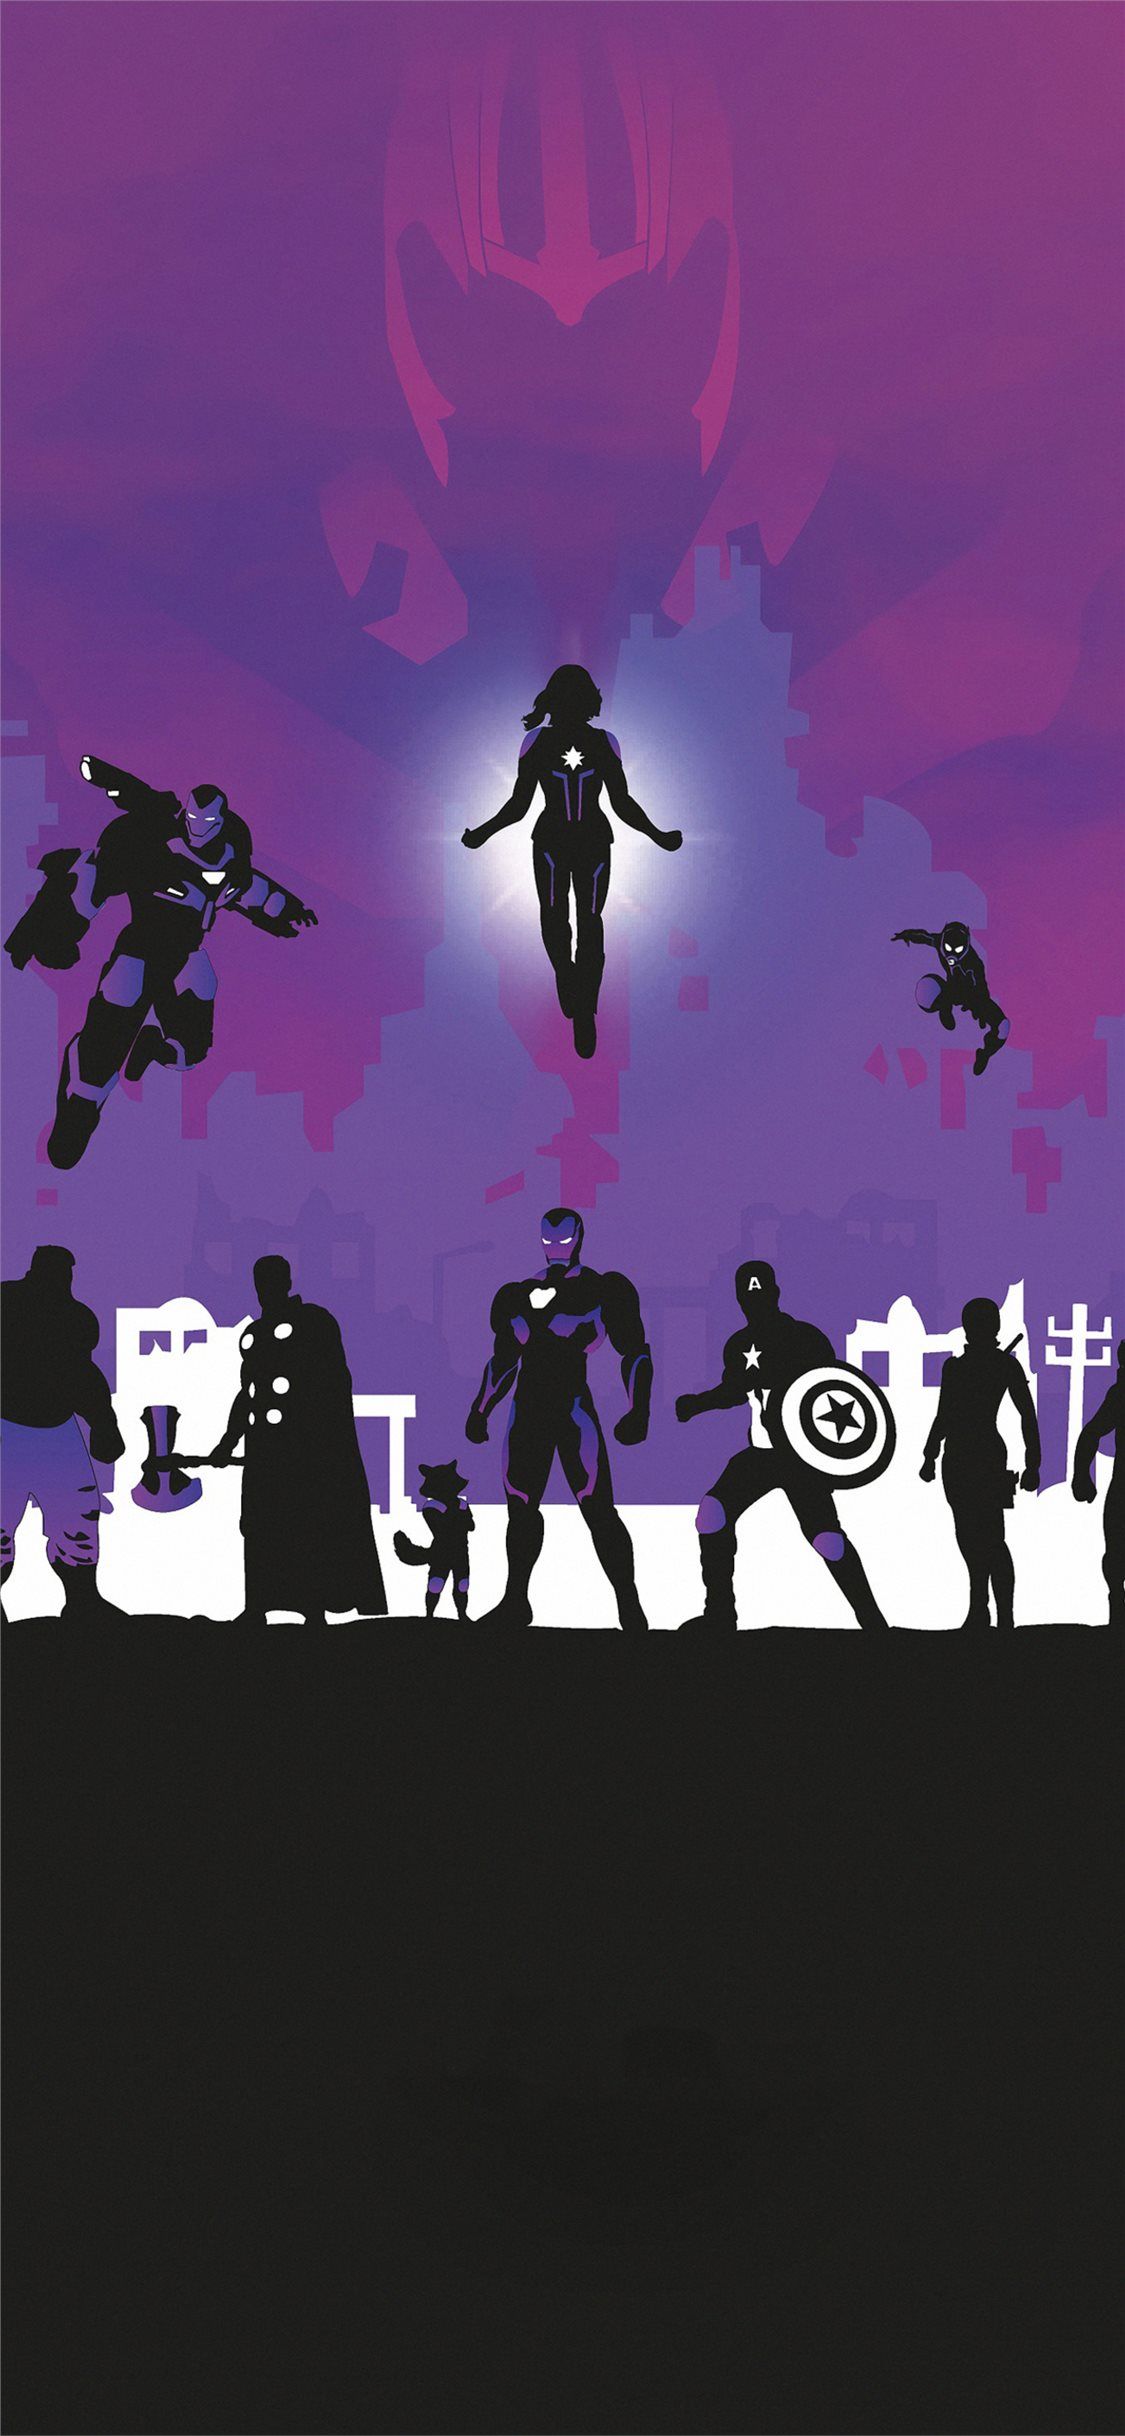 avengersend game. Wallpaper, Avengers, iPhone